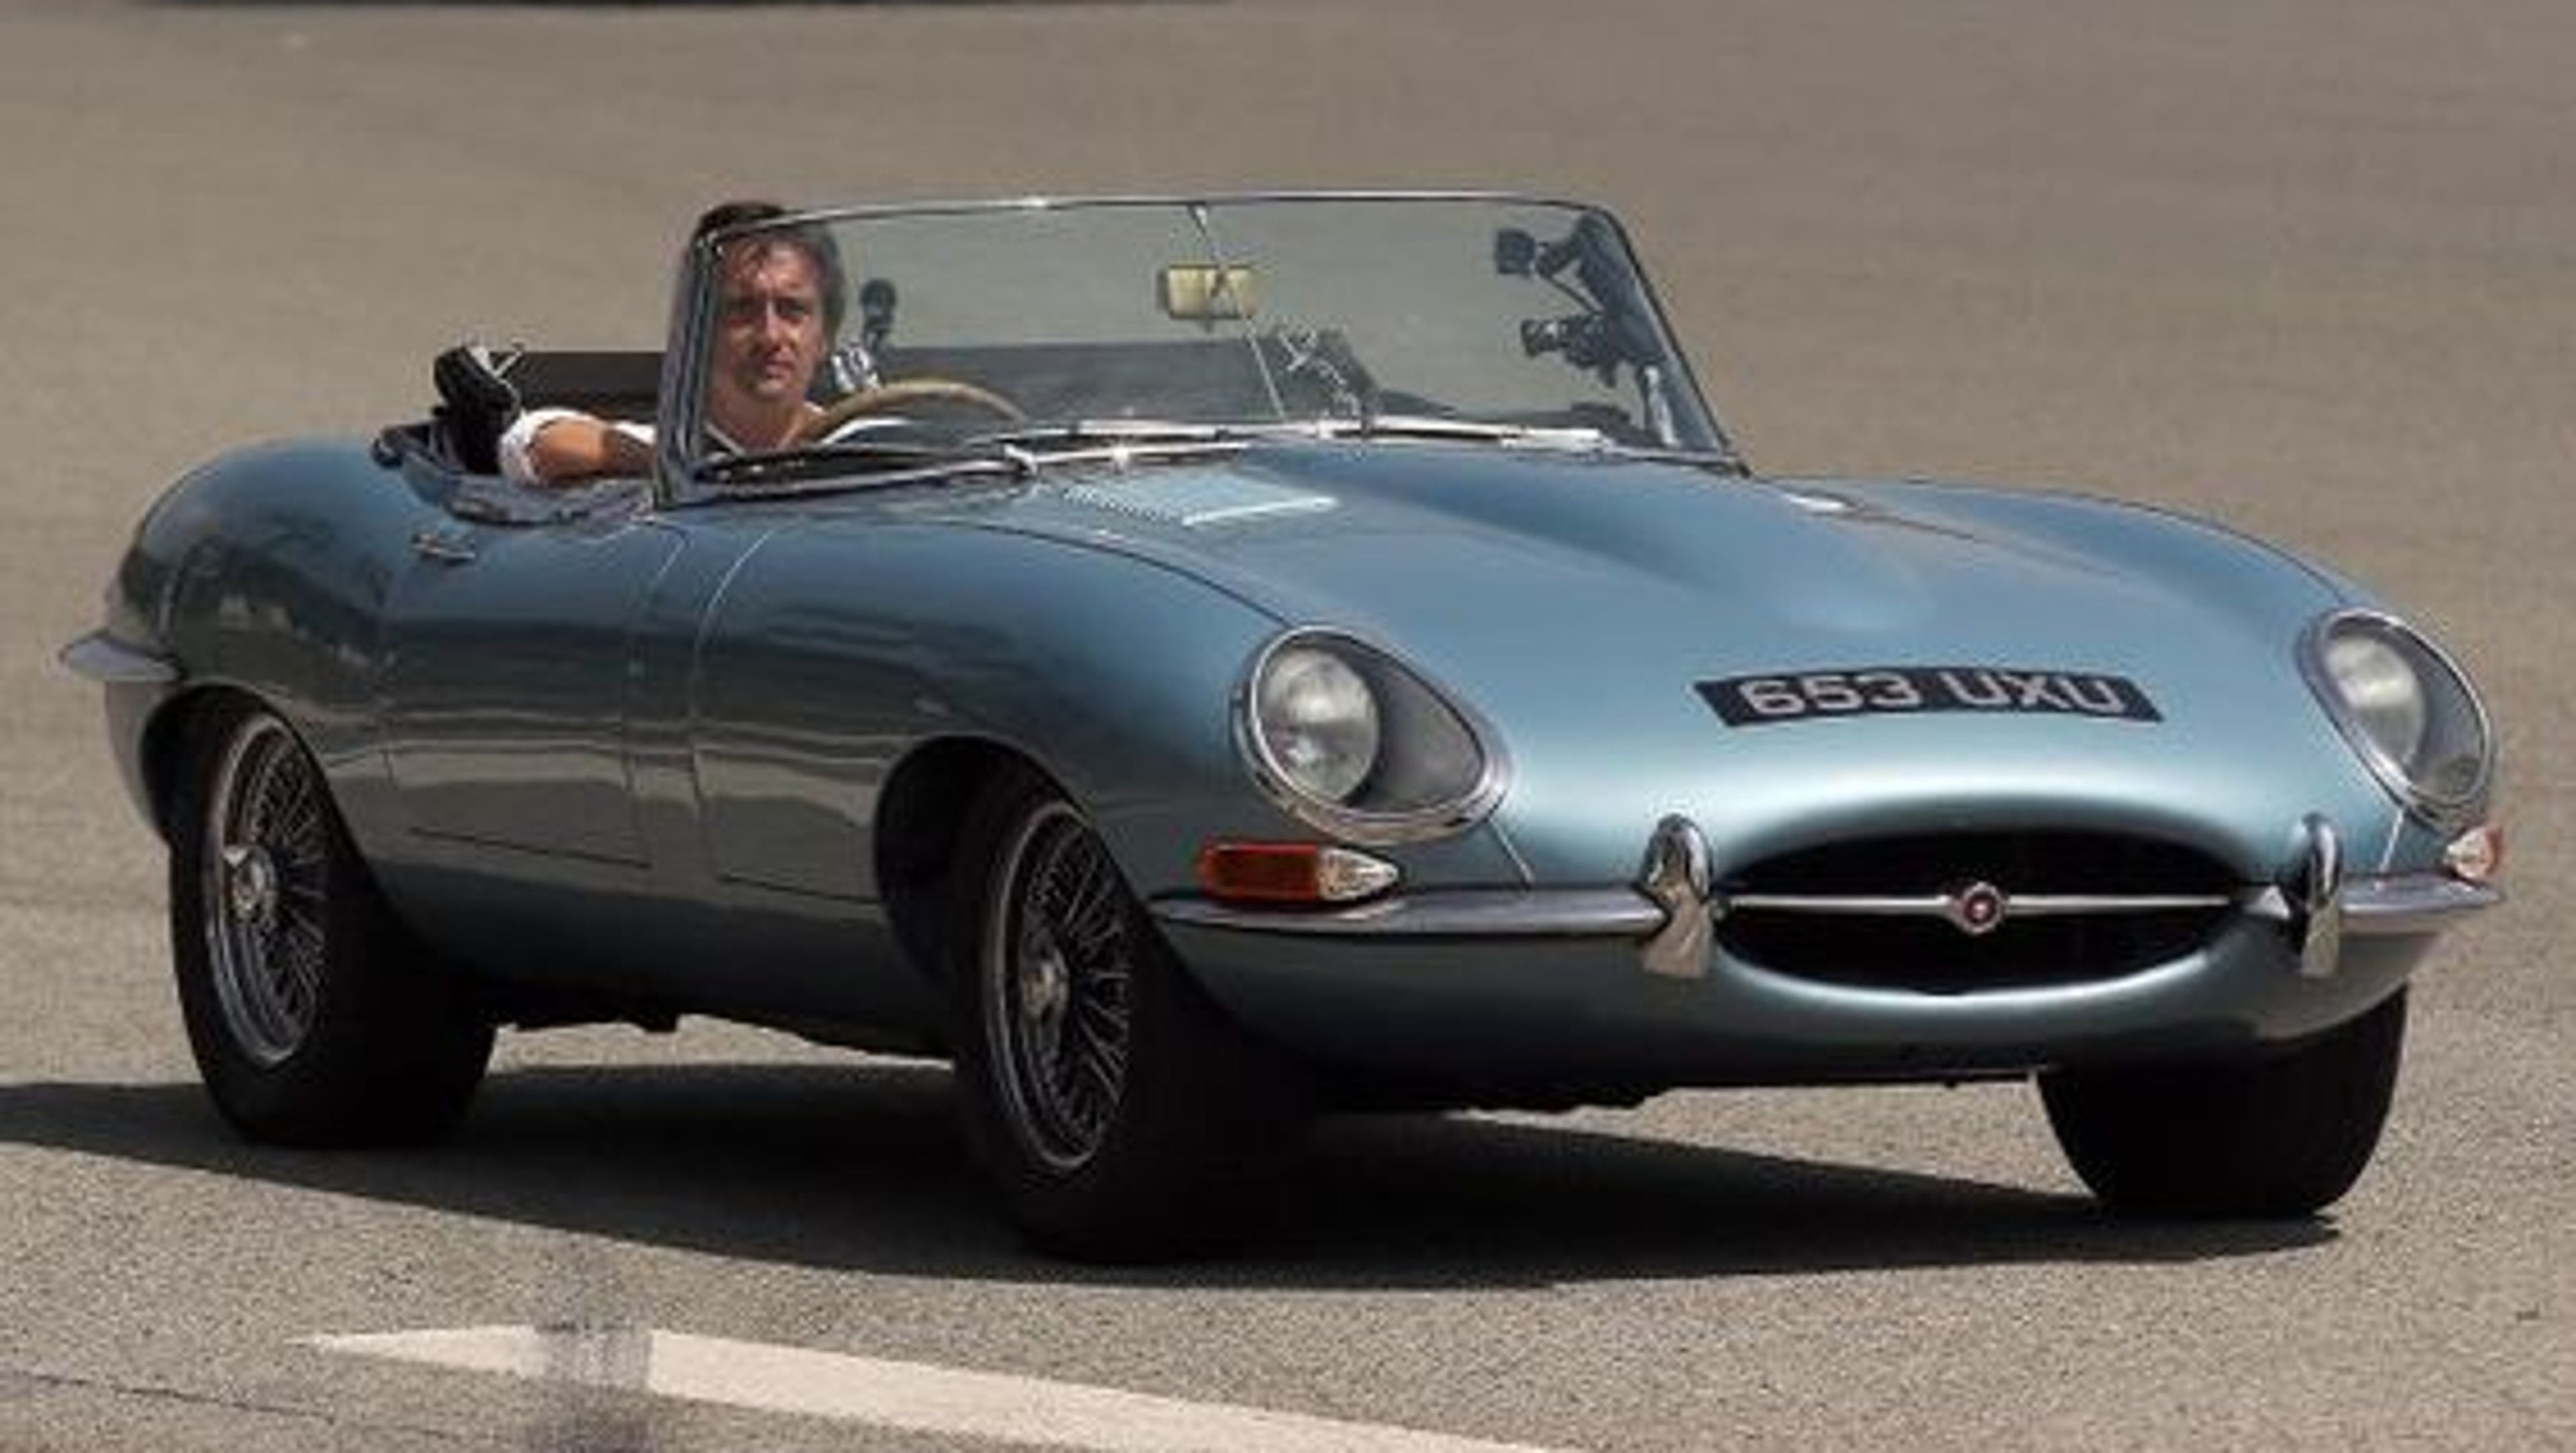 Richard Hammond paladea este precioso Jaguar E-TYPE del 69